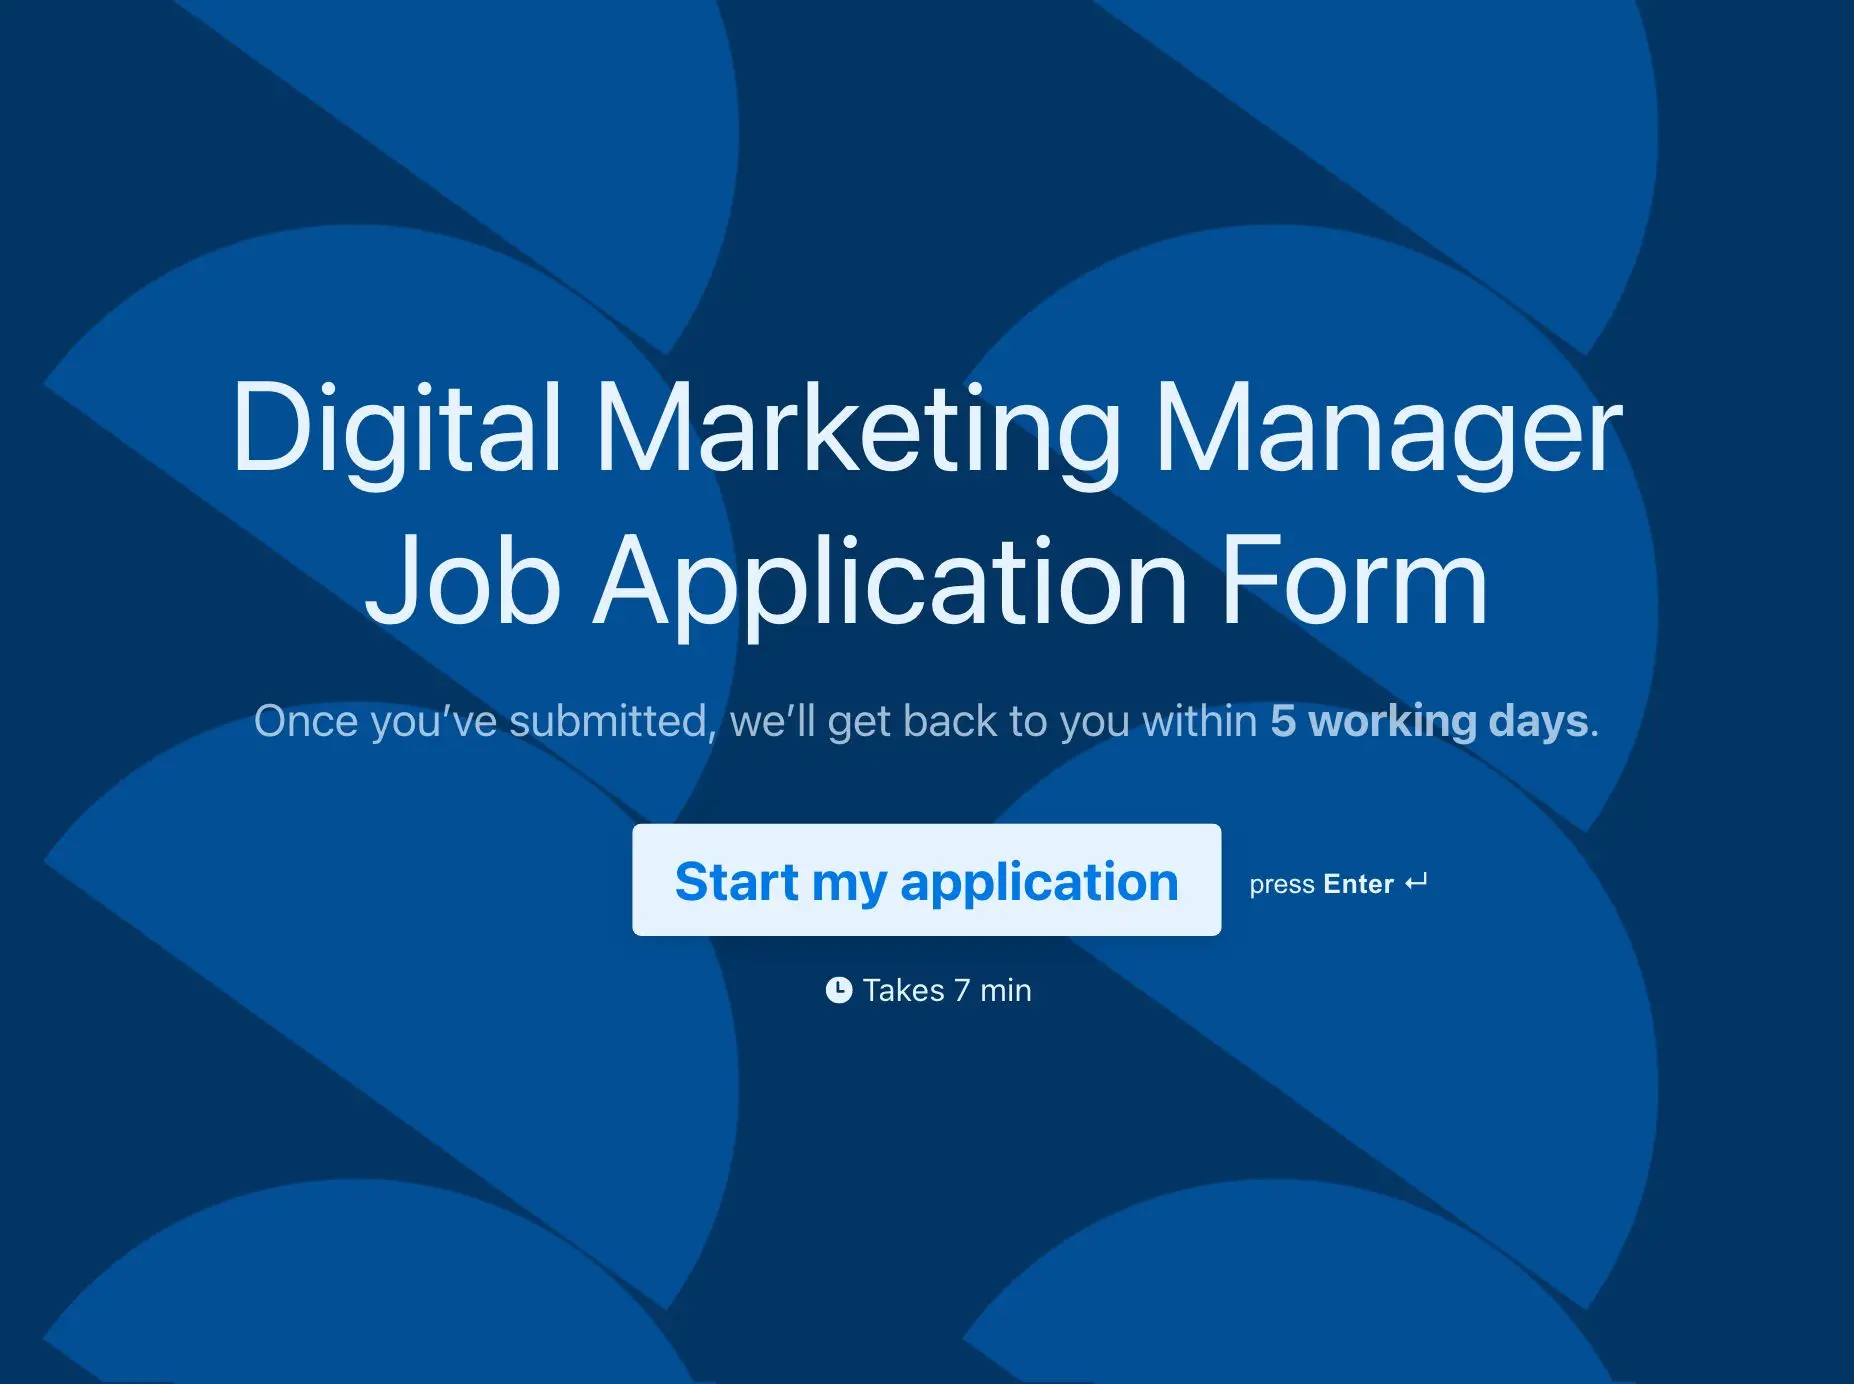 Digital Marketing Manager Job Application Form Template Hero